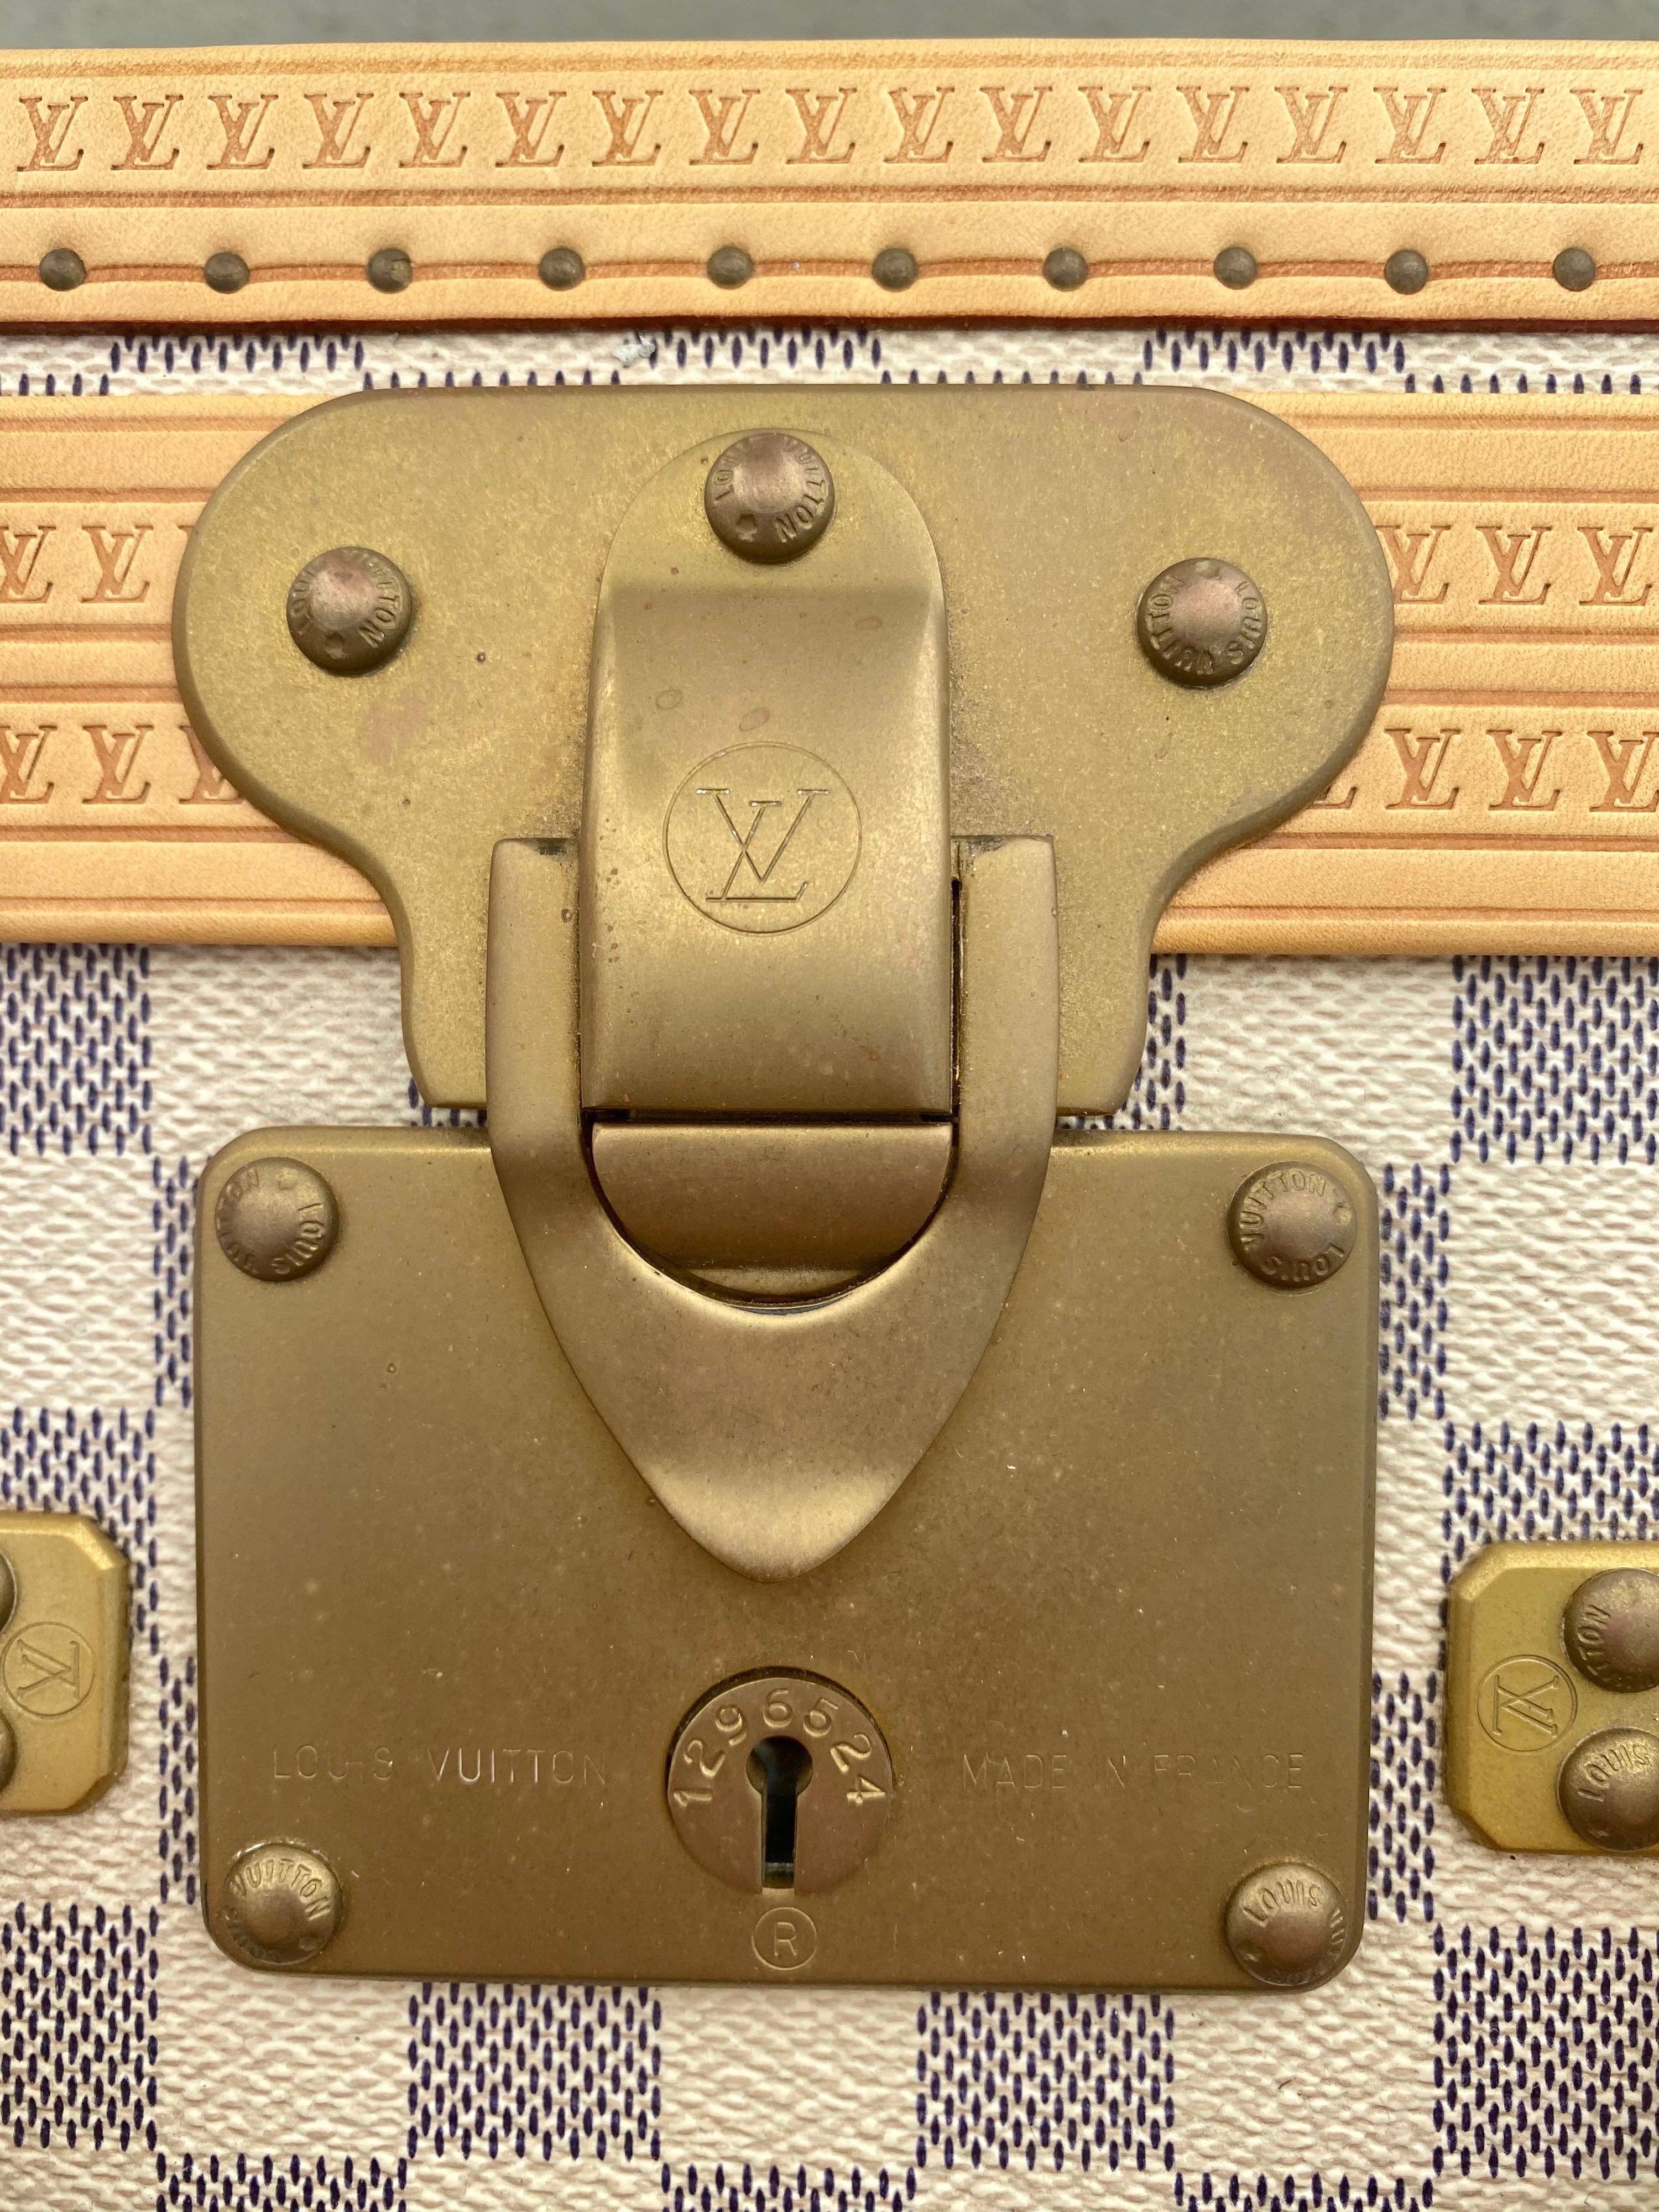 New Louis Vuitton Limited Edition Alzer Damier Azur Rare Travel Trunk 75cm 9